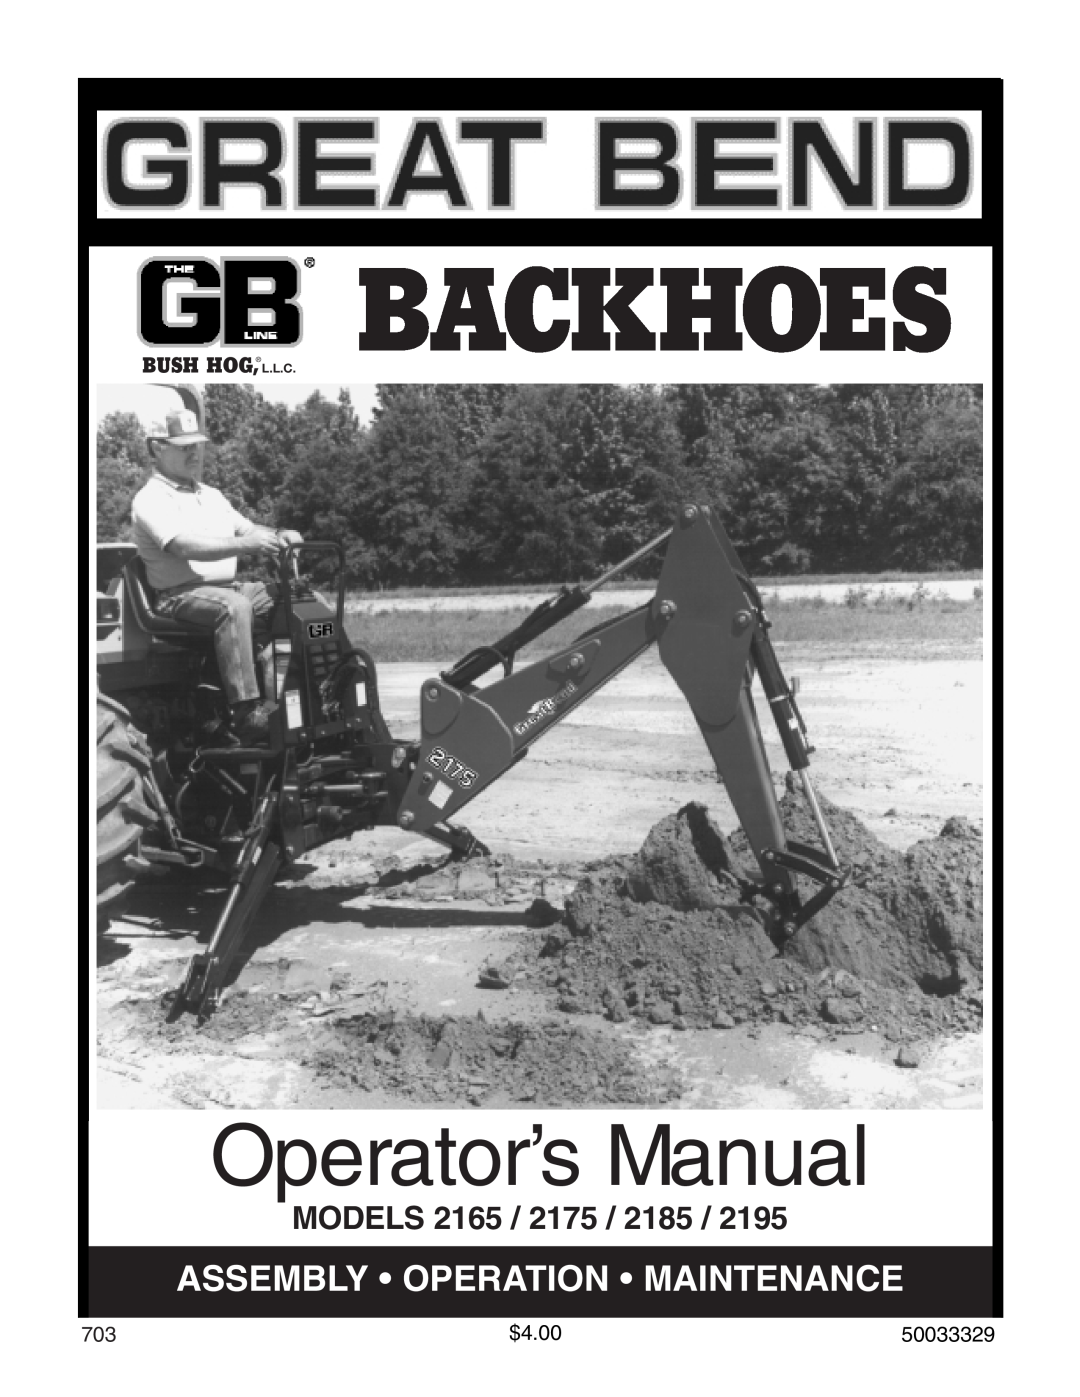 Bush Hog 2165 manual Models, Bush Hog, L.L.C, Backhoes, Operator’s Manual, Assembly Operation Maintenance 